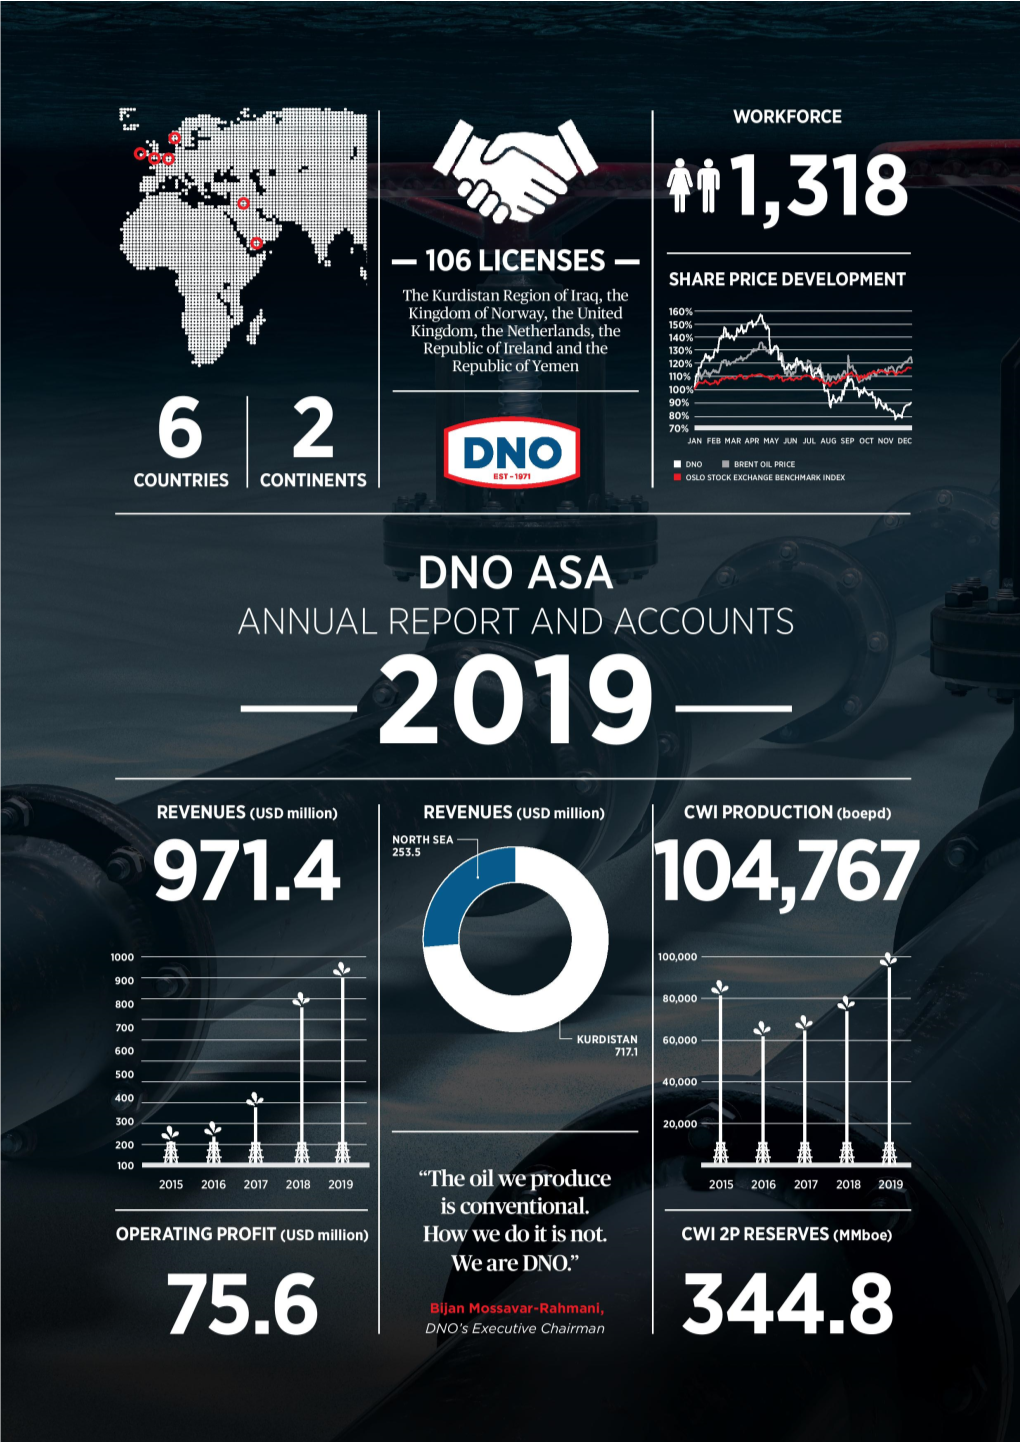 DNO ASA Annual Report and Accounts 2019